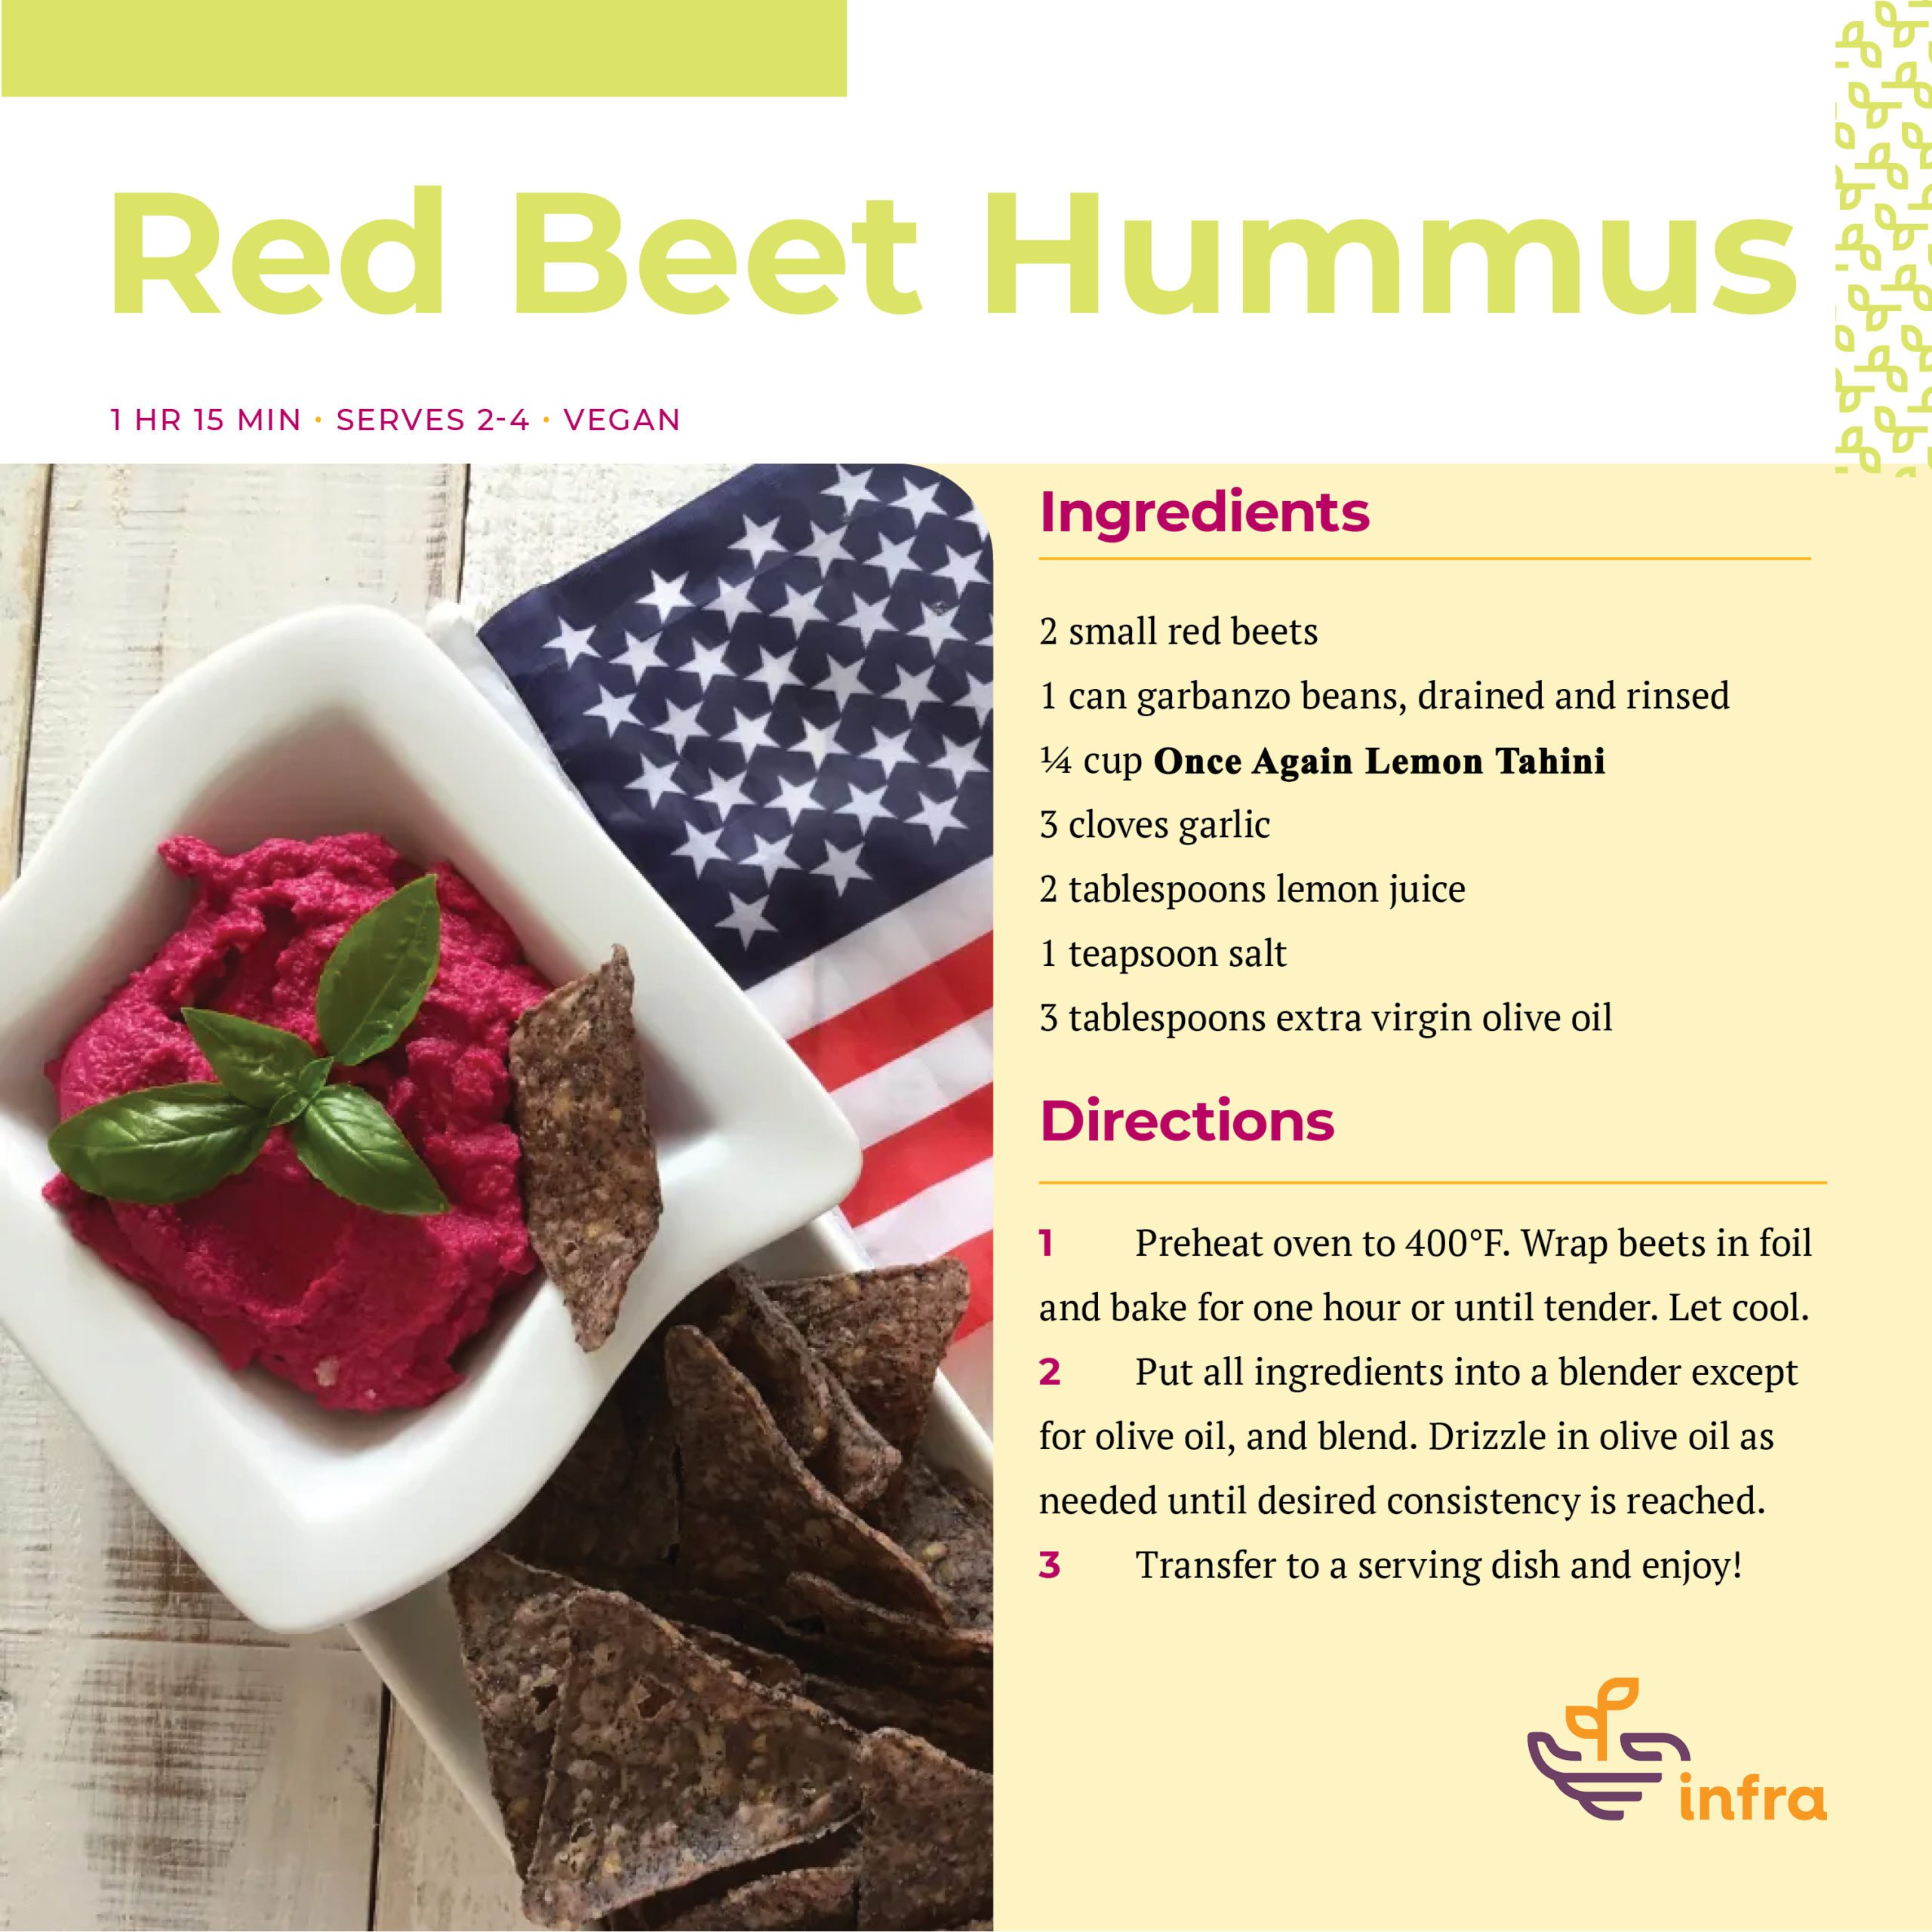 Red Beet Hummus